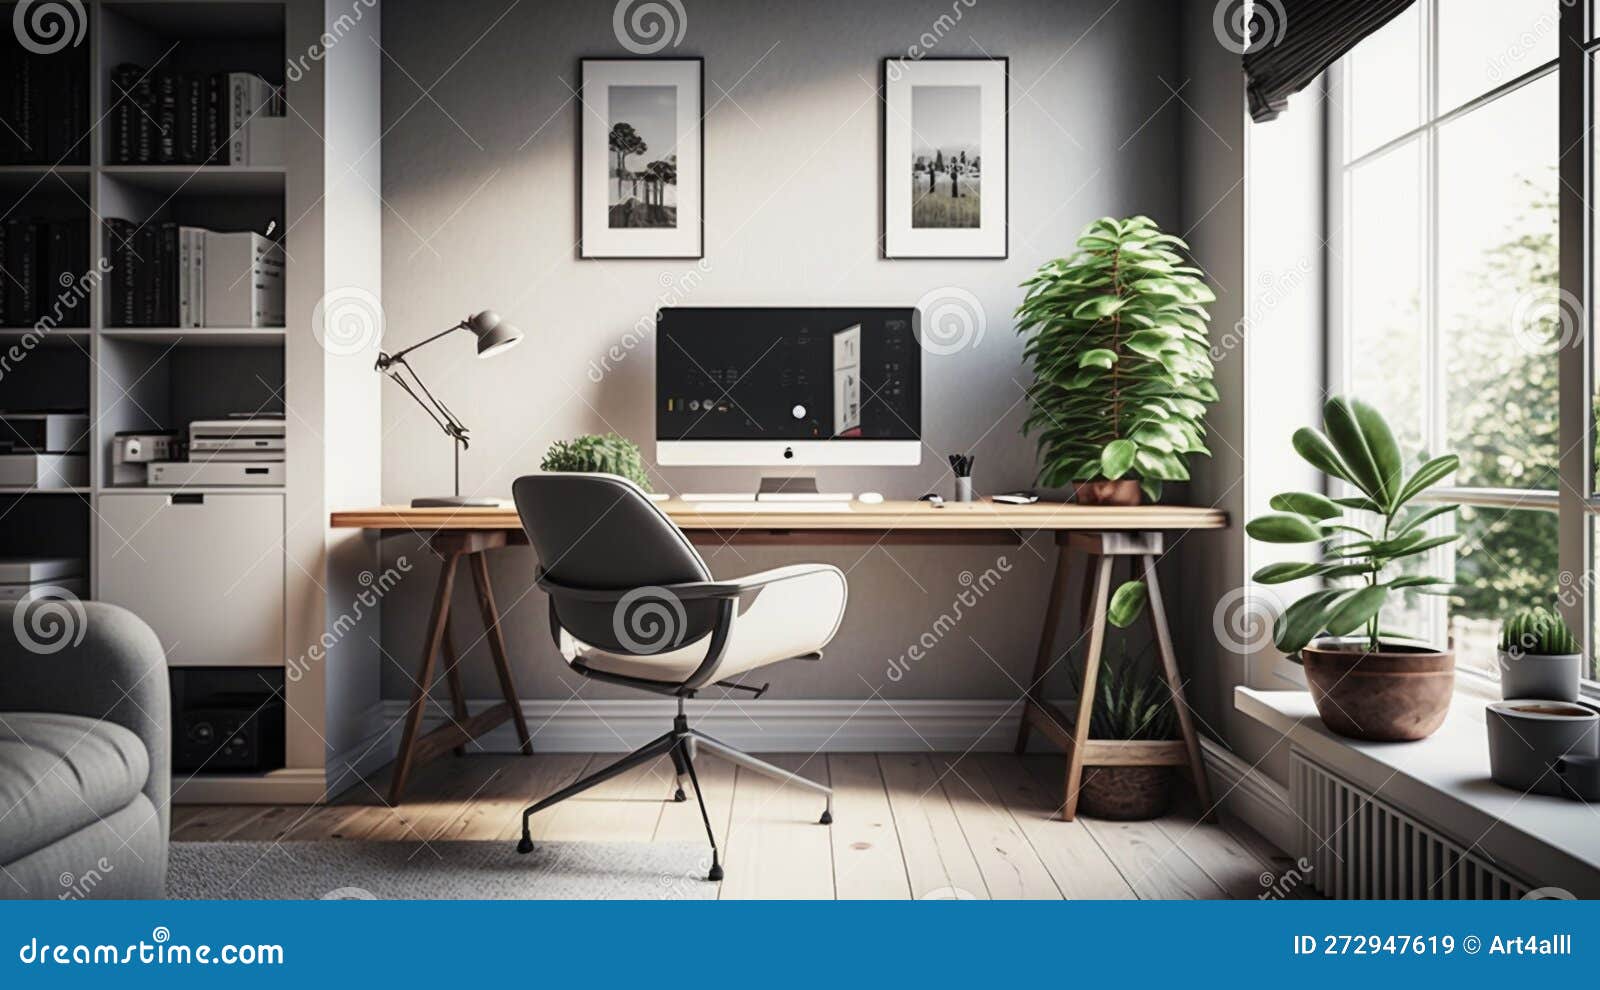 https://thumbs.dreamstime.com/z/modern-home-office-setup-modern-computer-houseplants-minimalist-decor-modern-home-office-setup-computer-houseplants-272947619.jpg